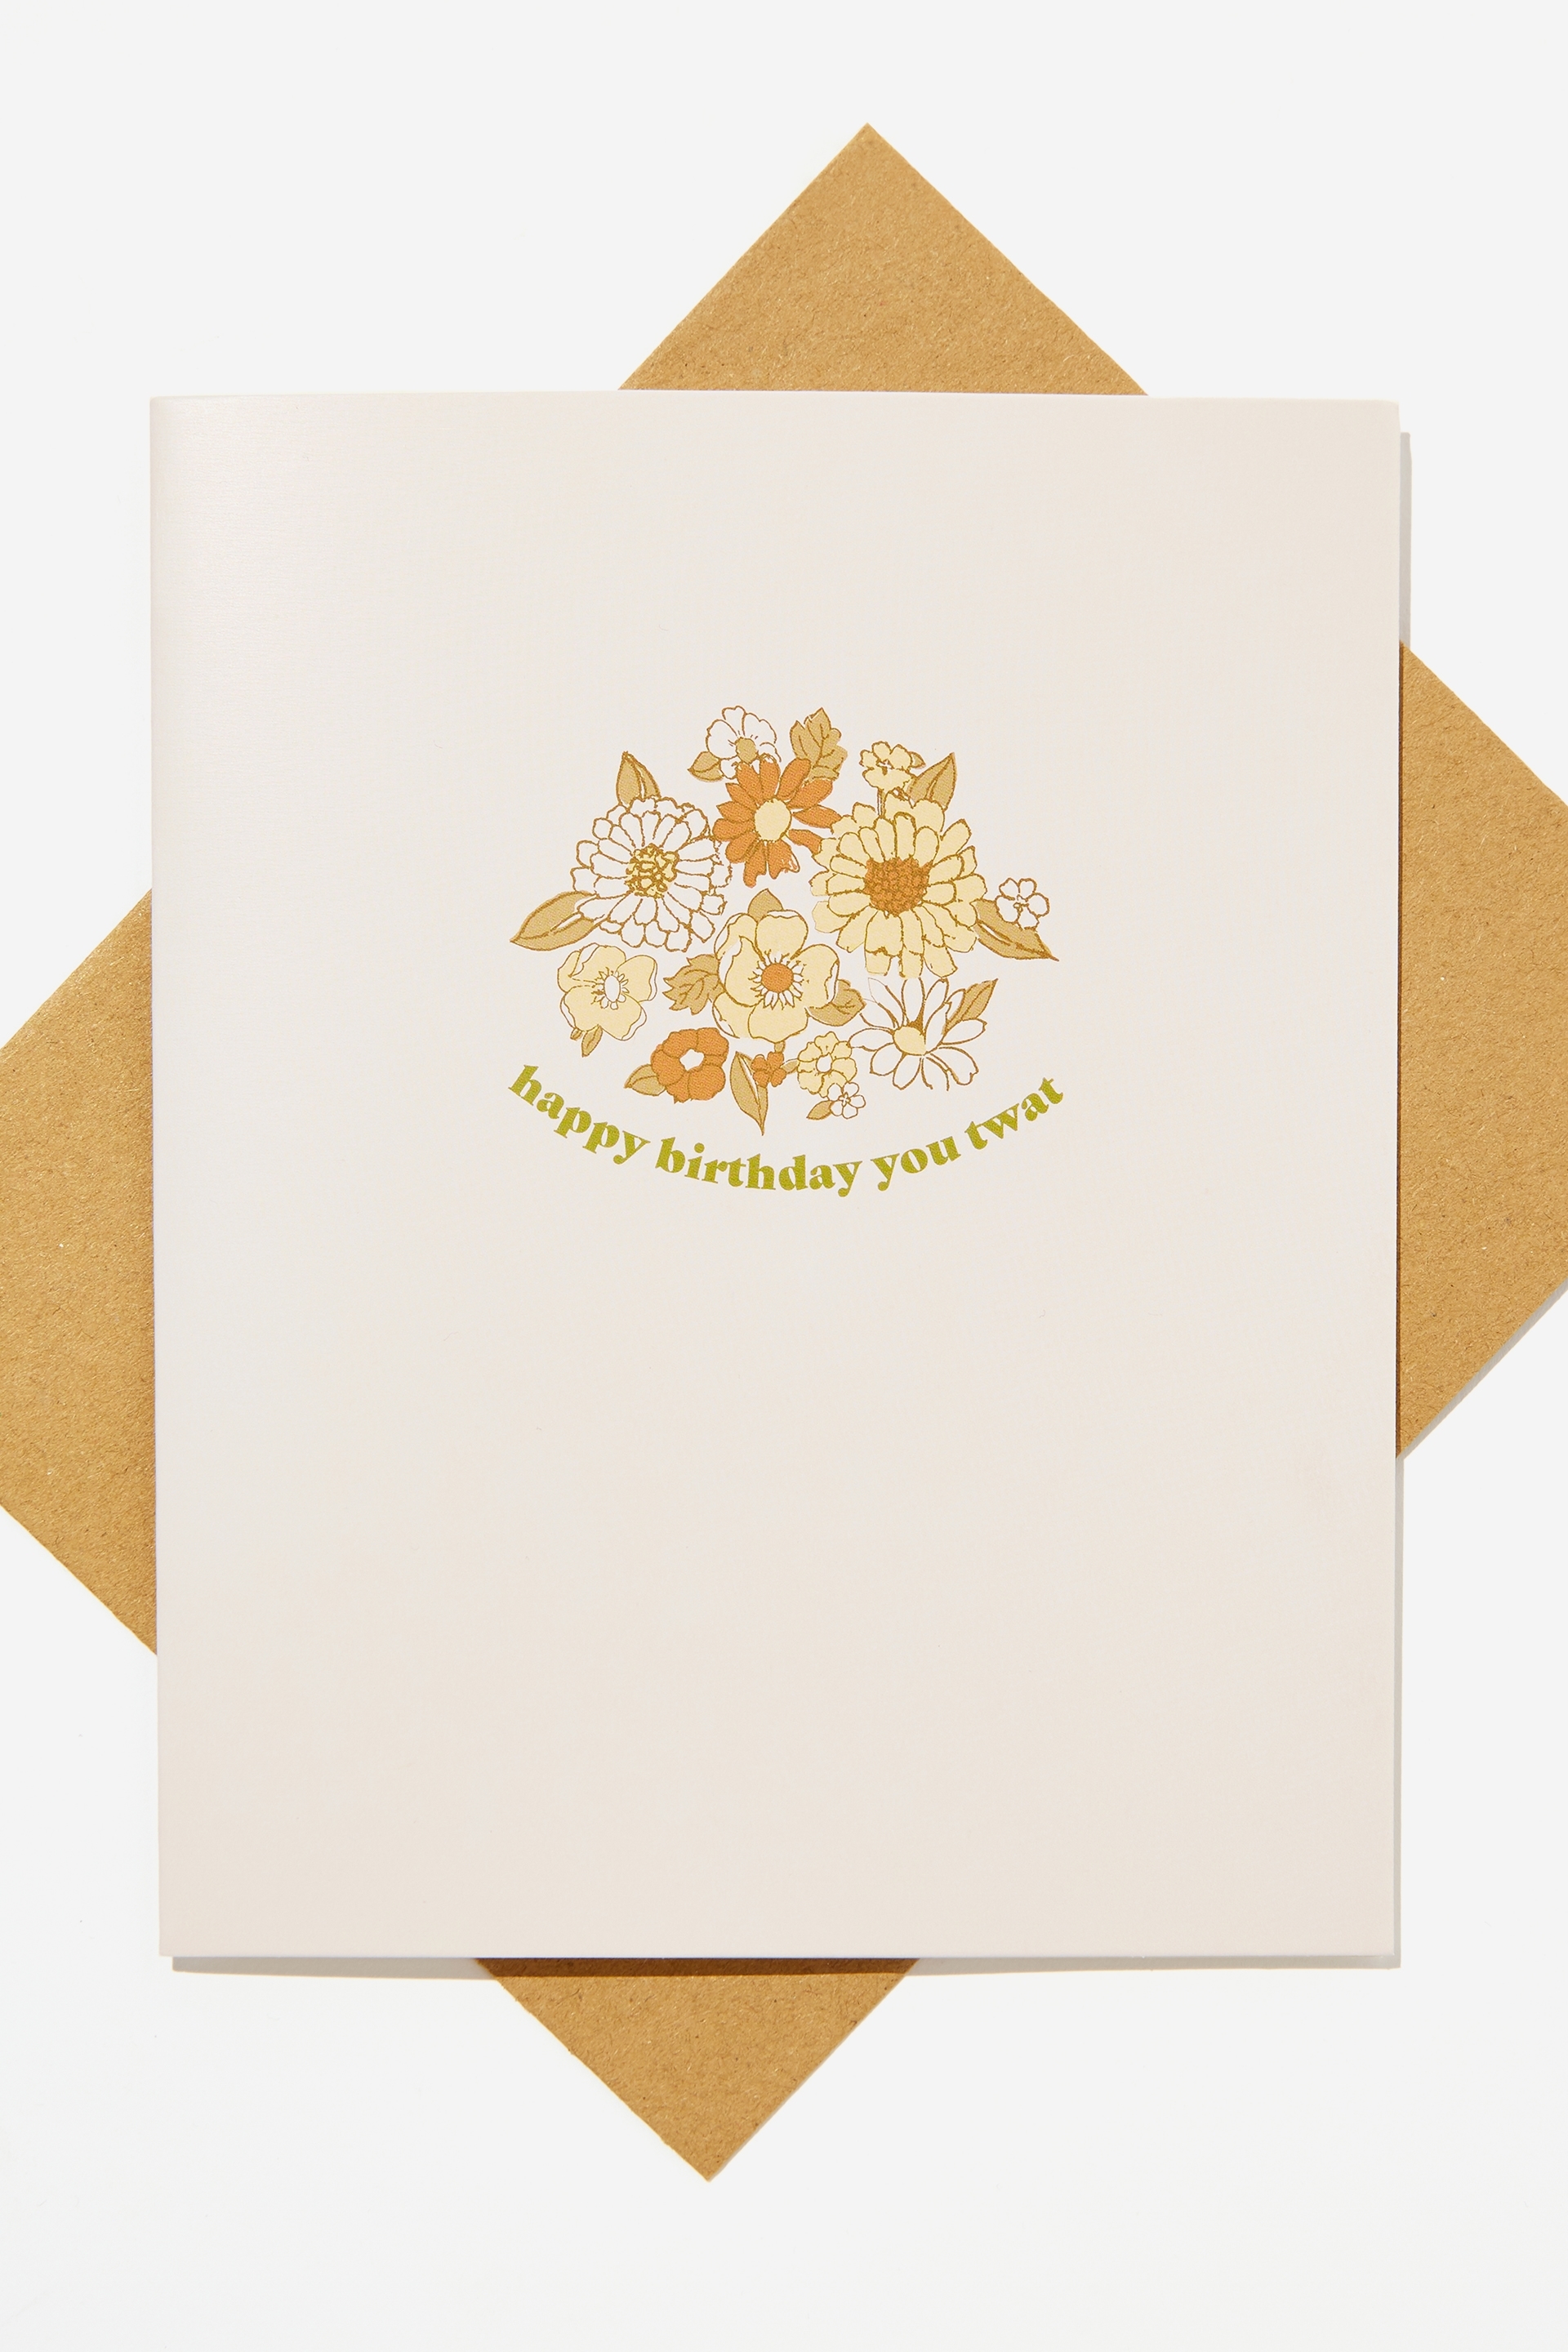 Typo - Funny Birthday Card - Rg uk you twat floral!